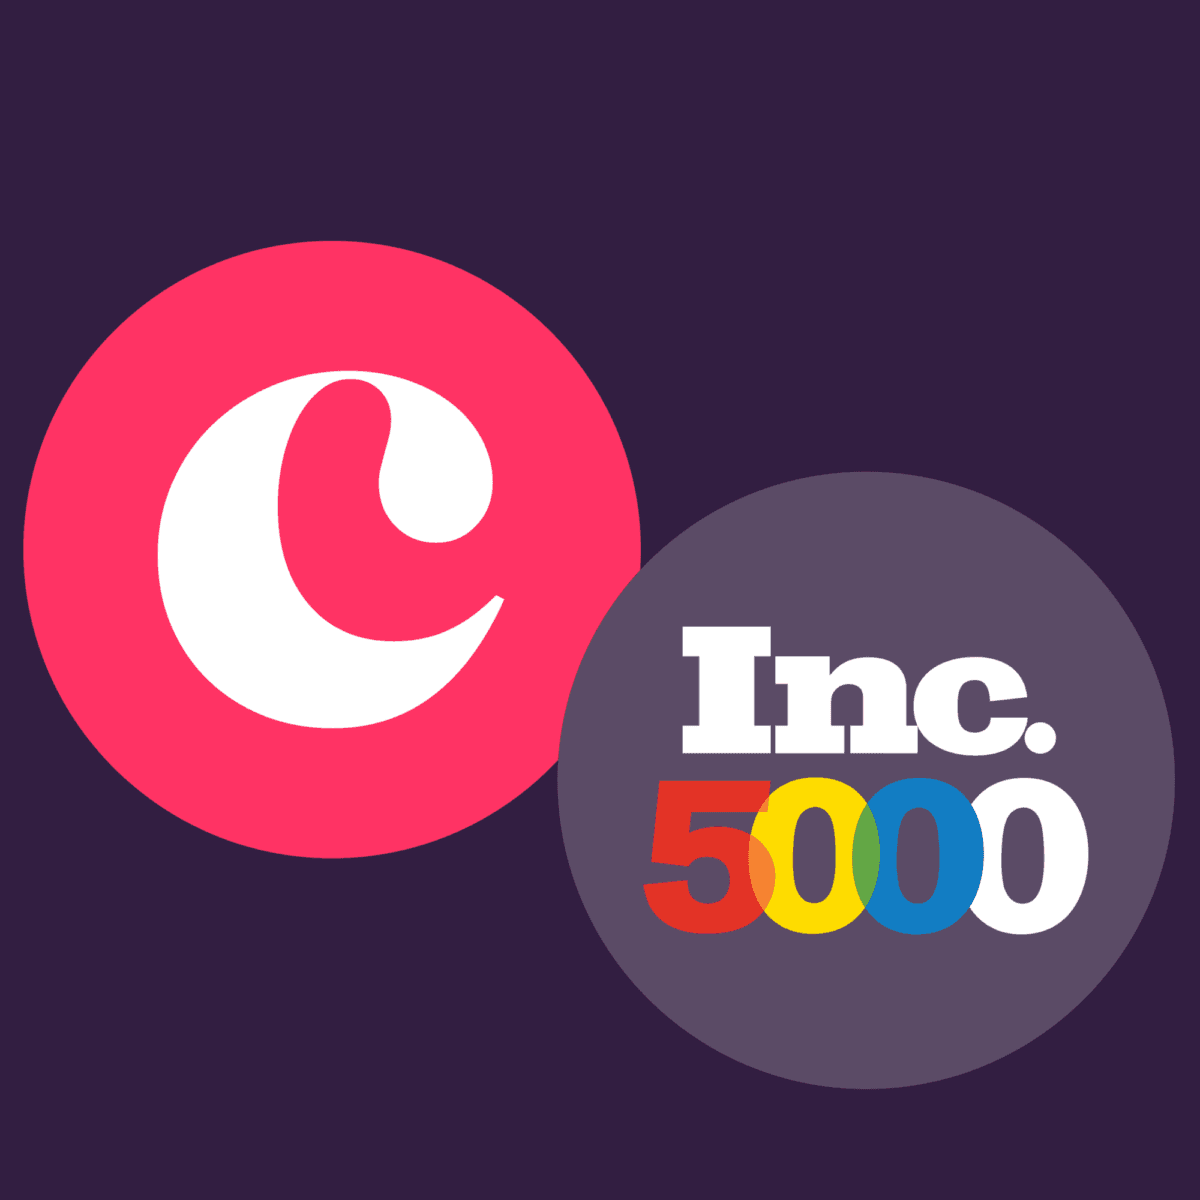 Inc5000 Image2